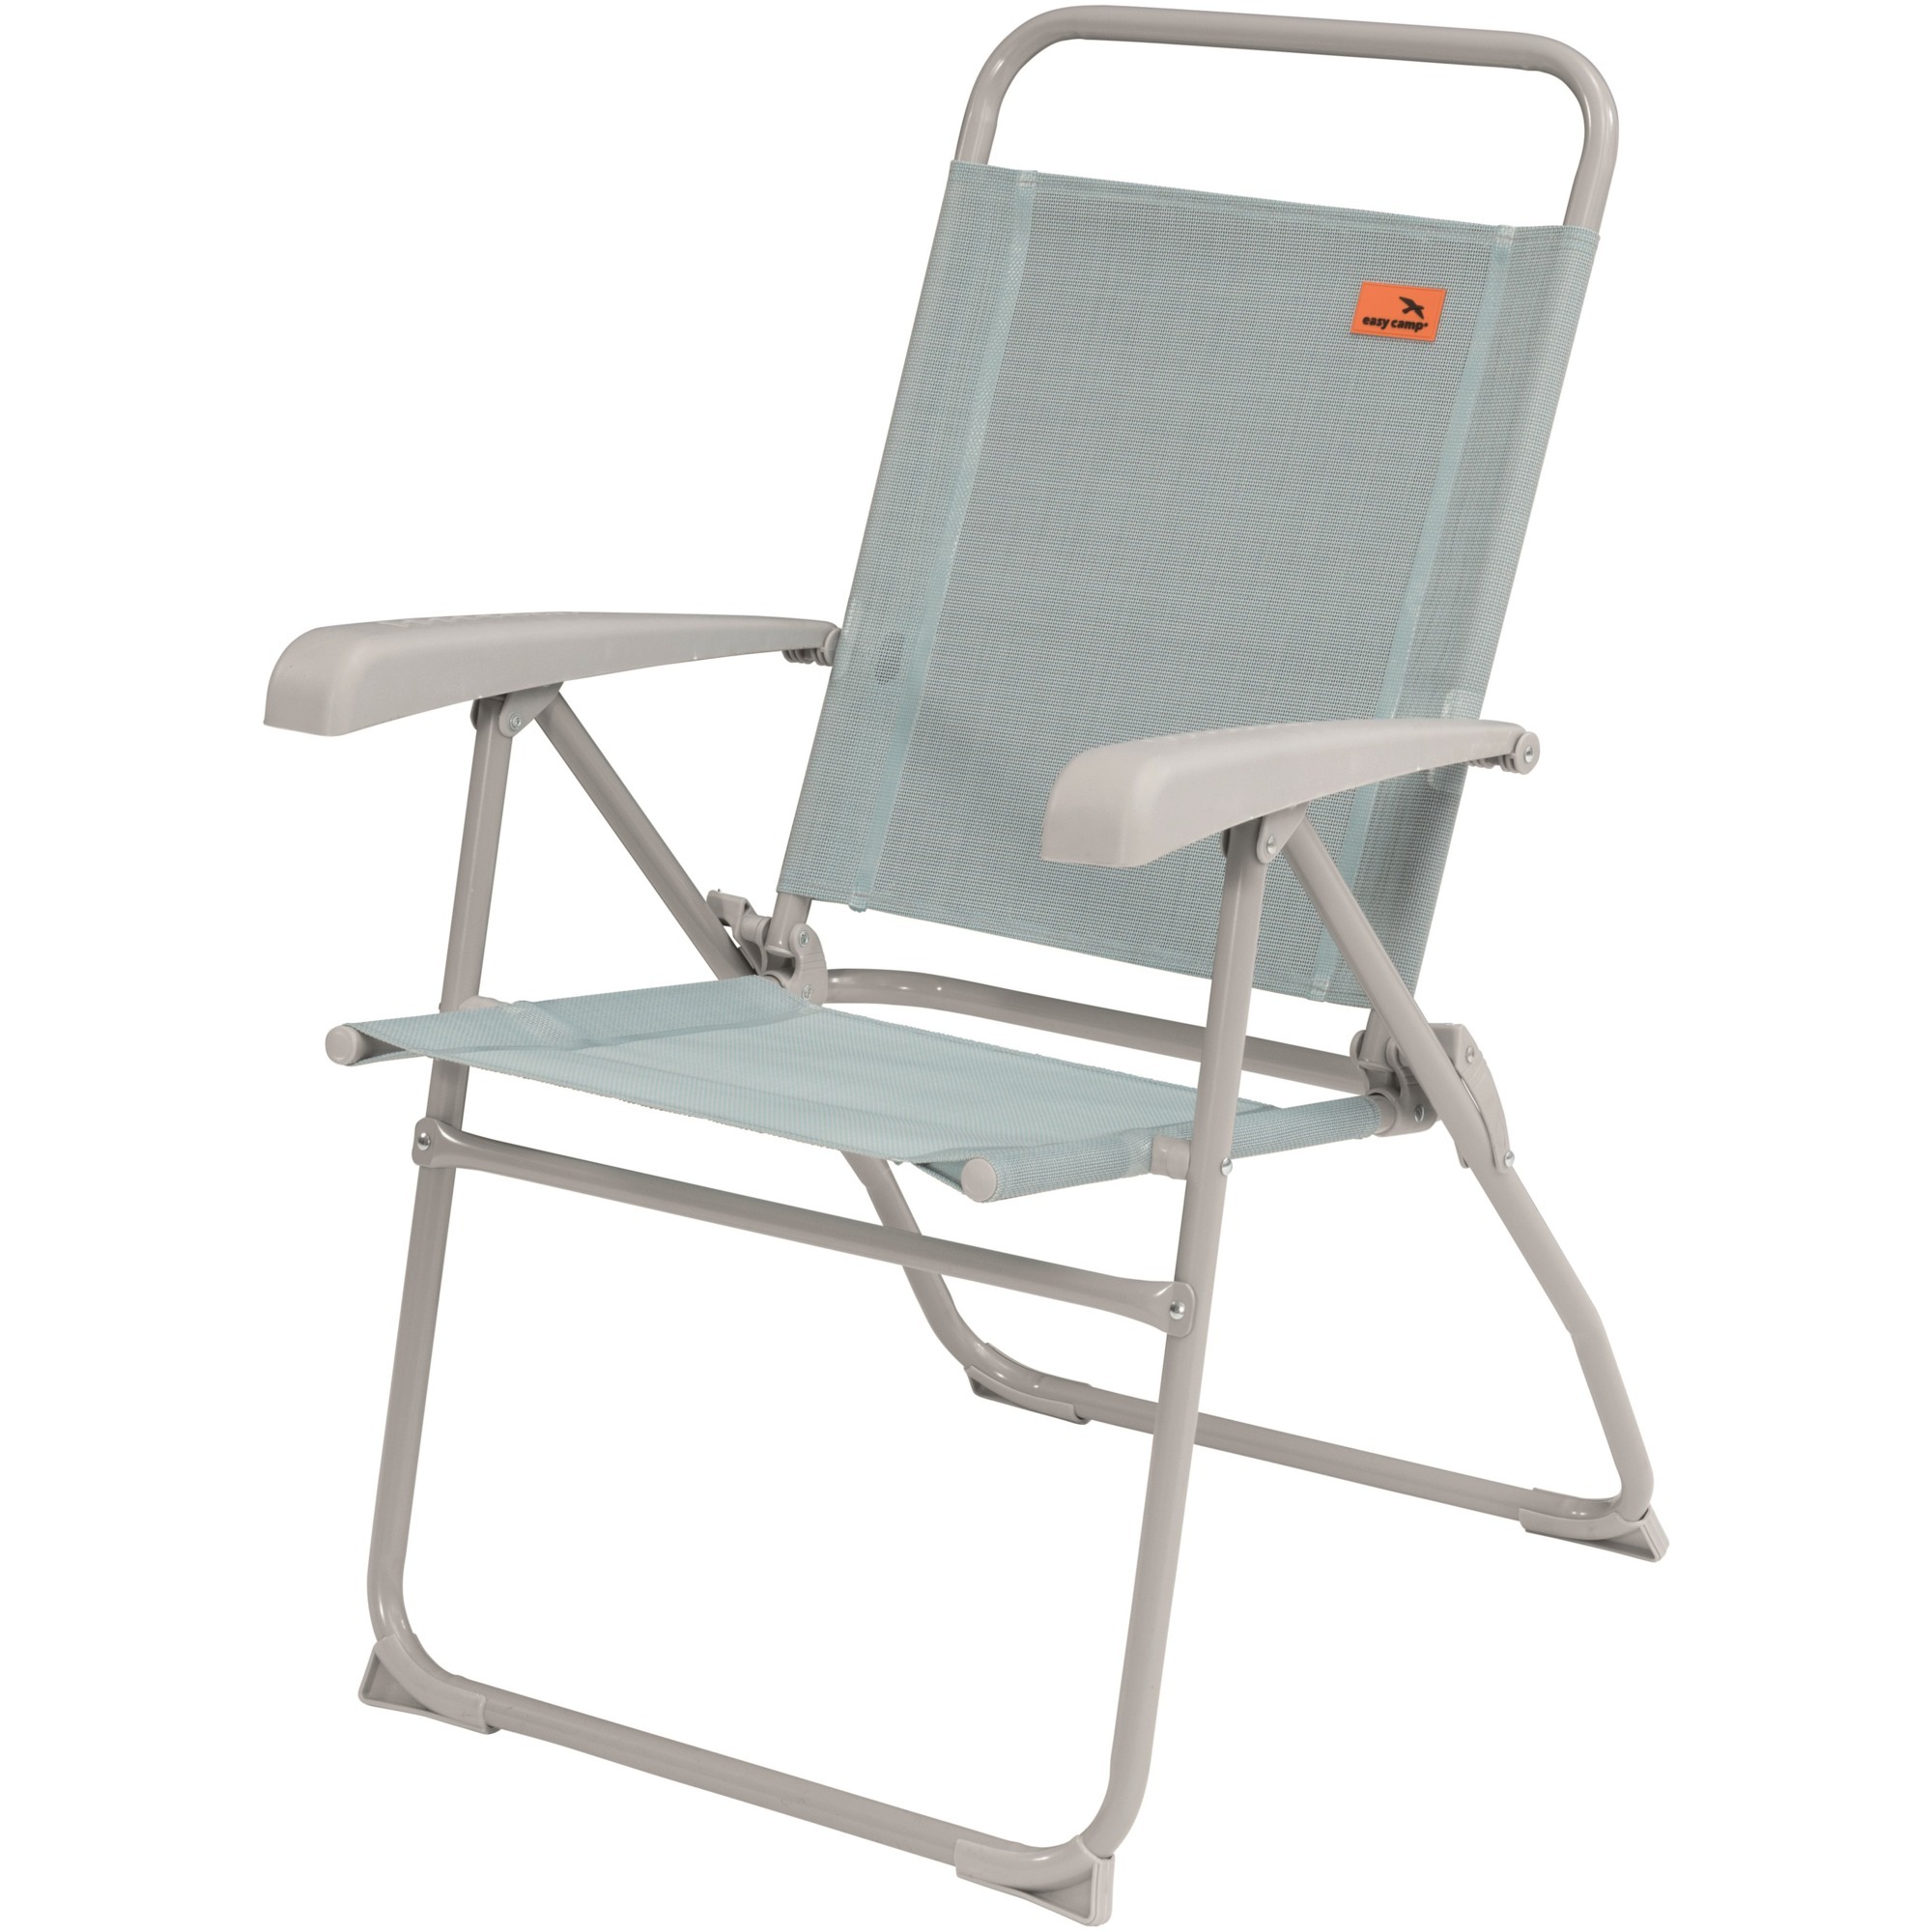 Image of Alternate - Spica Aqua Blue 420055, Camping-Stuhl online einkaufen bei Alternate